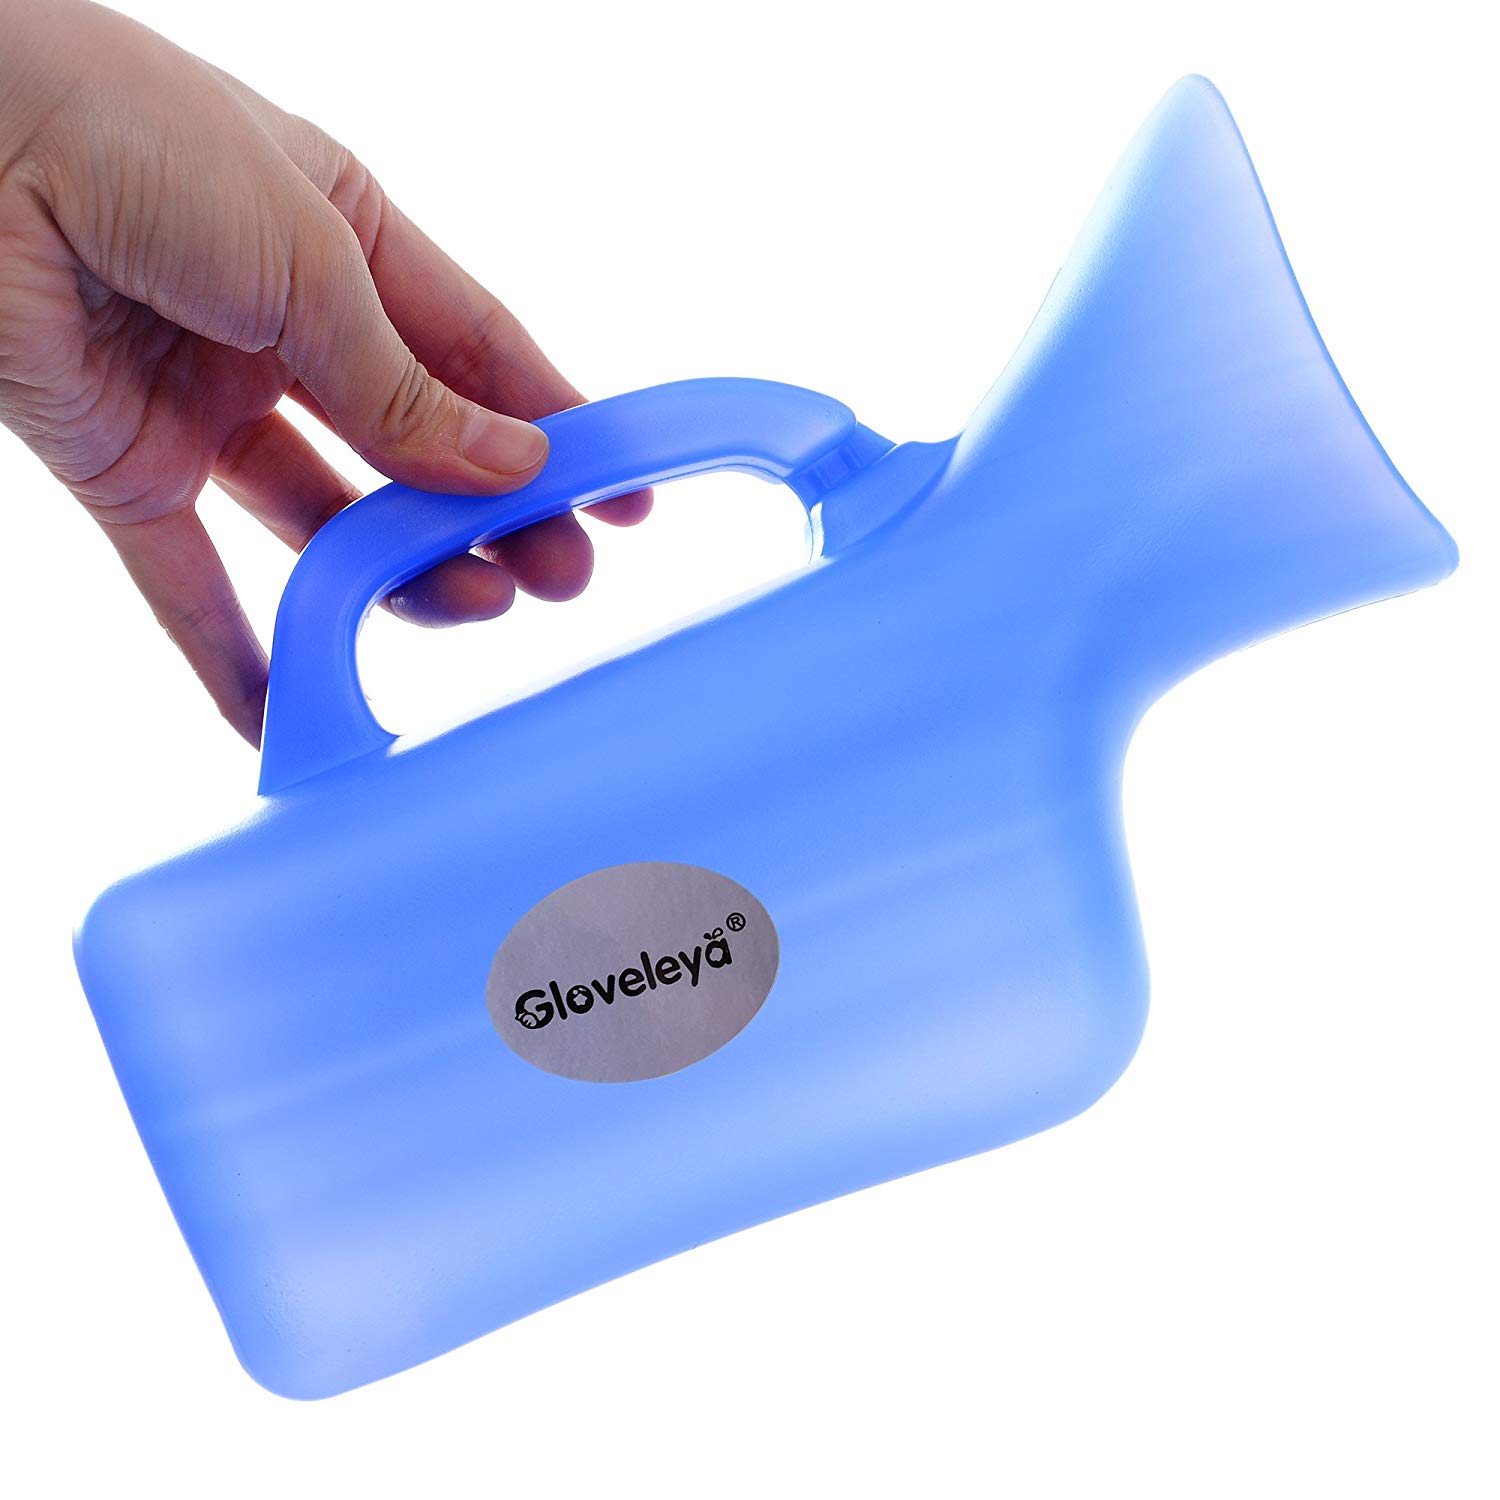  Gloveleya Female Portable Urinal Plastic Potty Pee Bottle for Camping Car Travel 800 ML  - female urinals